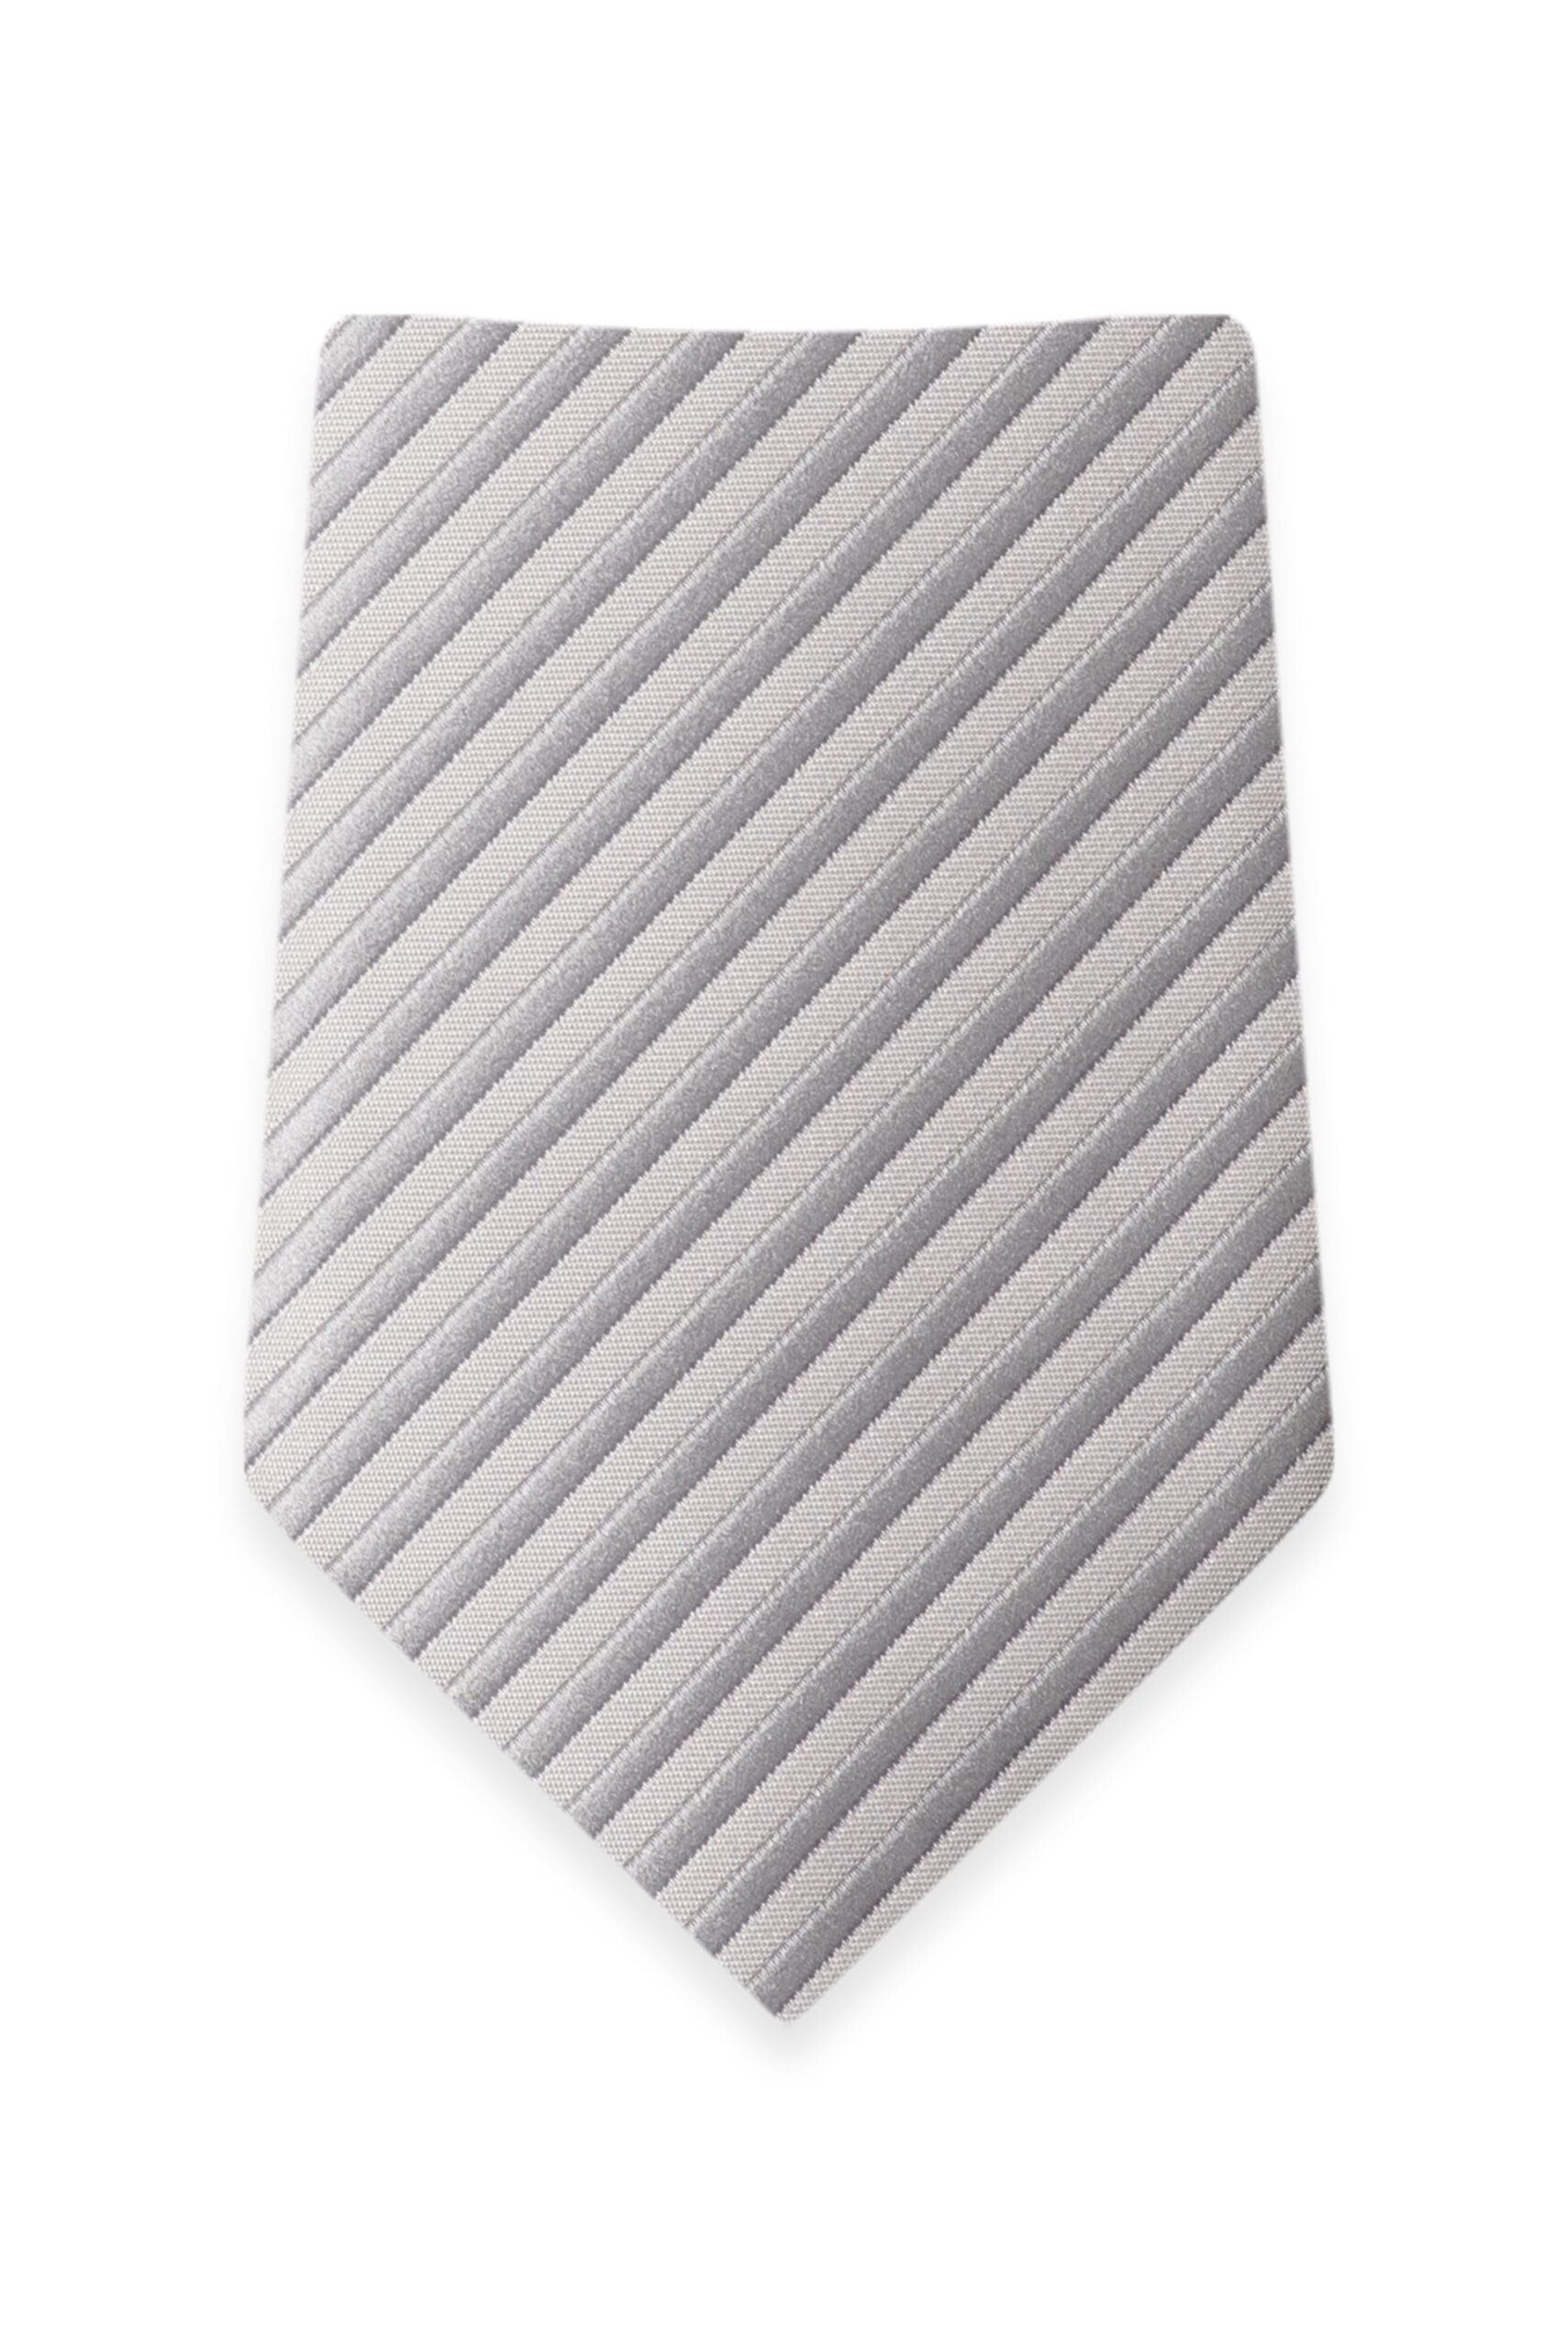 Striped Platinum Self-Tie Windsor Tie